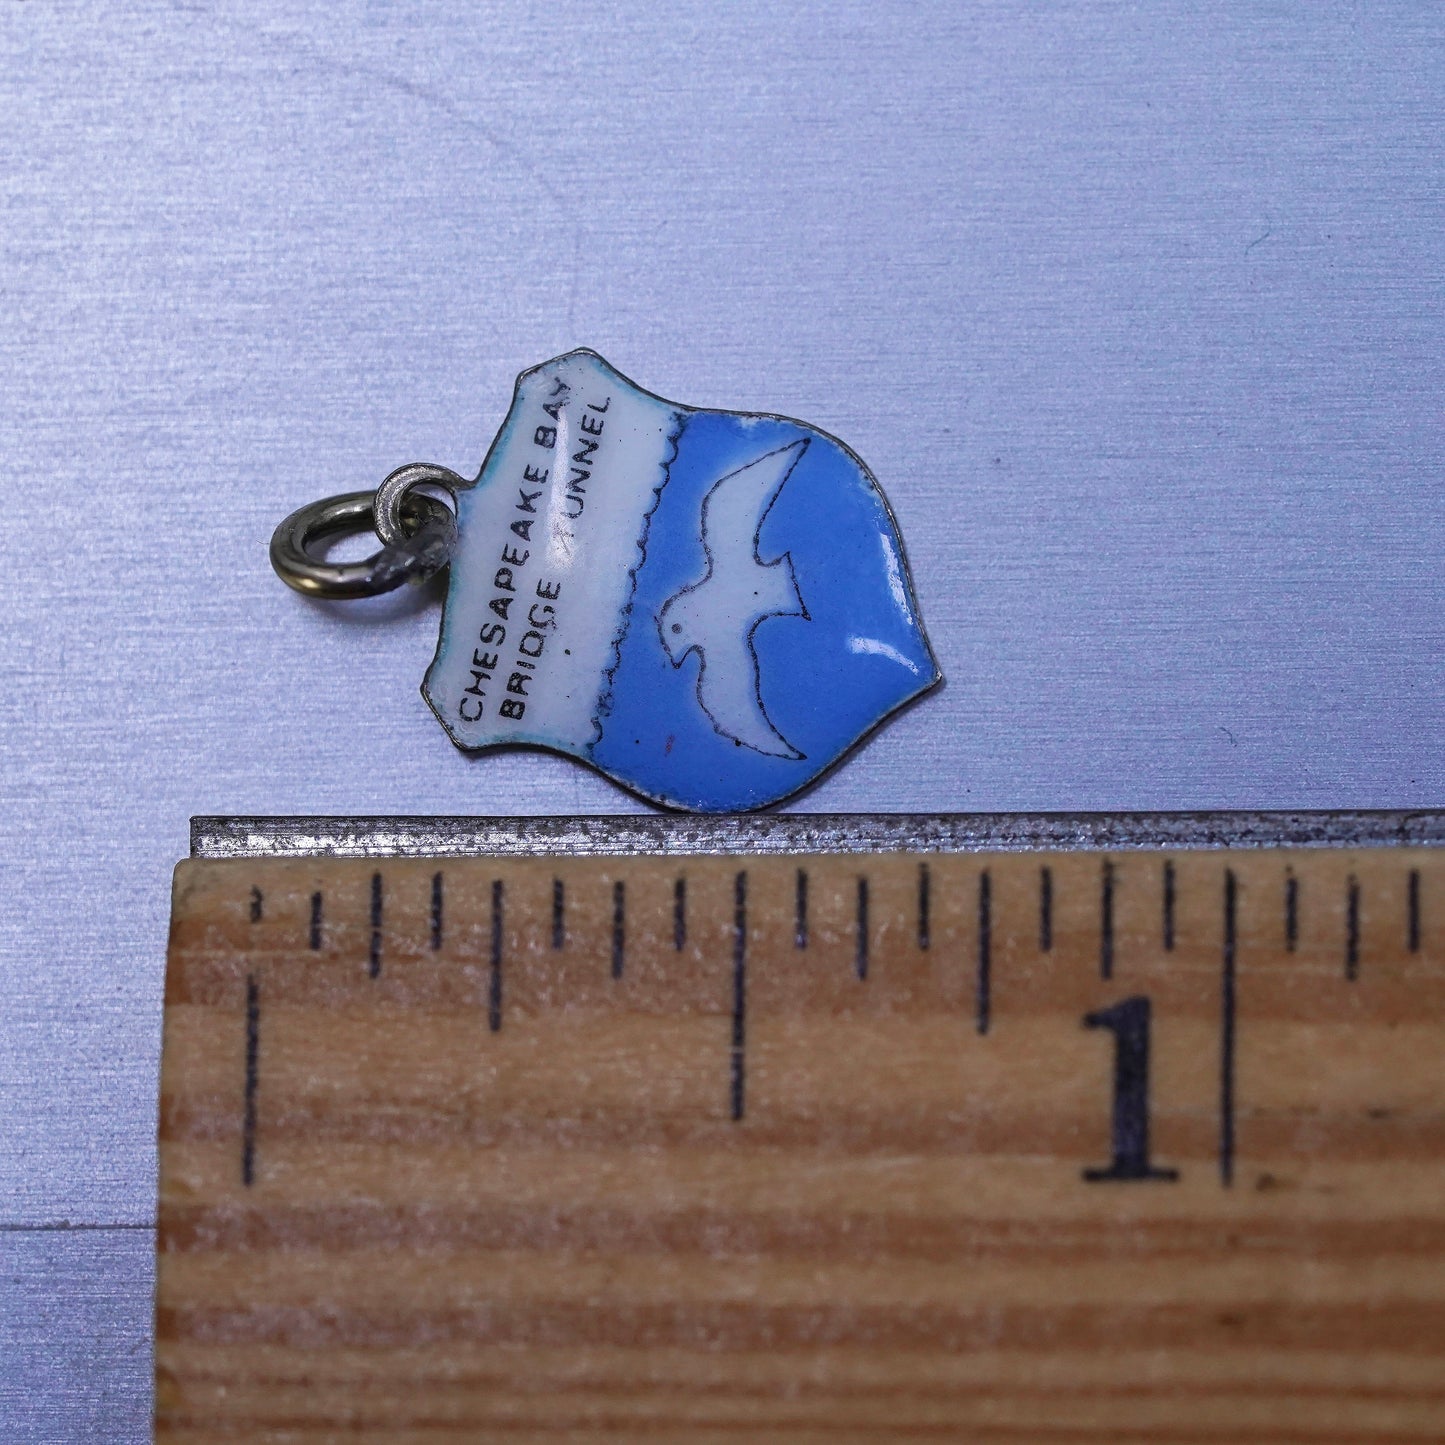 sterling silver pendant, 925 blue enamel “Chesapeake Bay bridge tunnel” charm